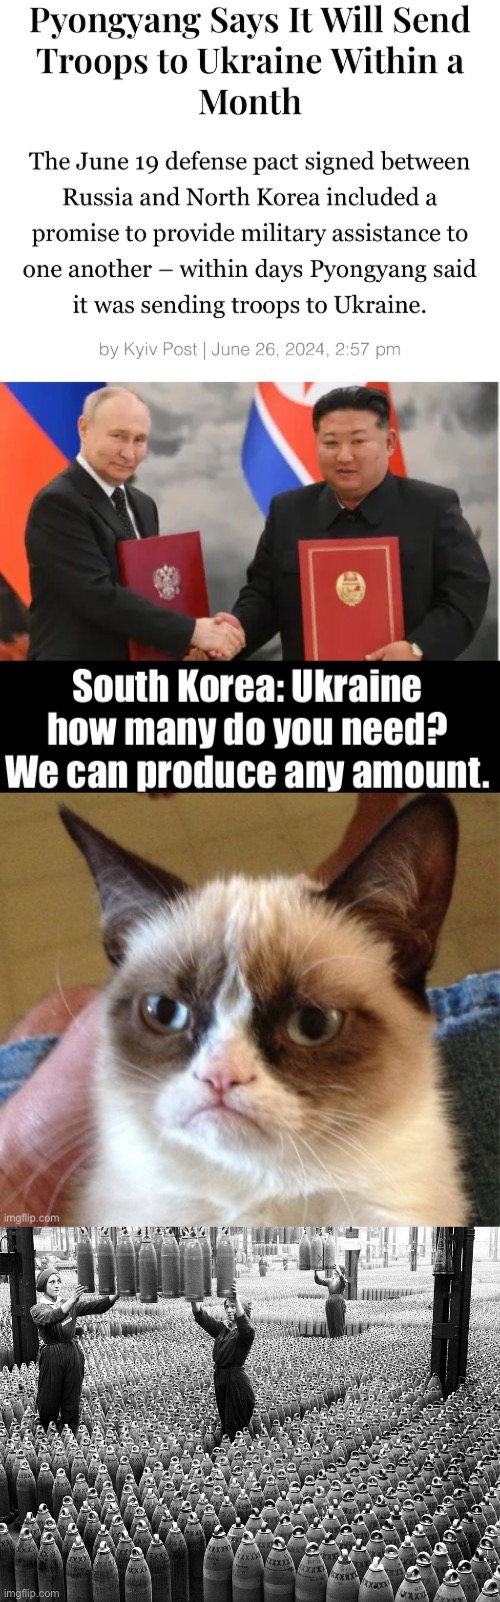 South Korea has a message | image tagged in south korea,north korea,russia,ukraine | made w/ Imgflip meme maker